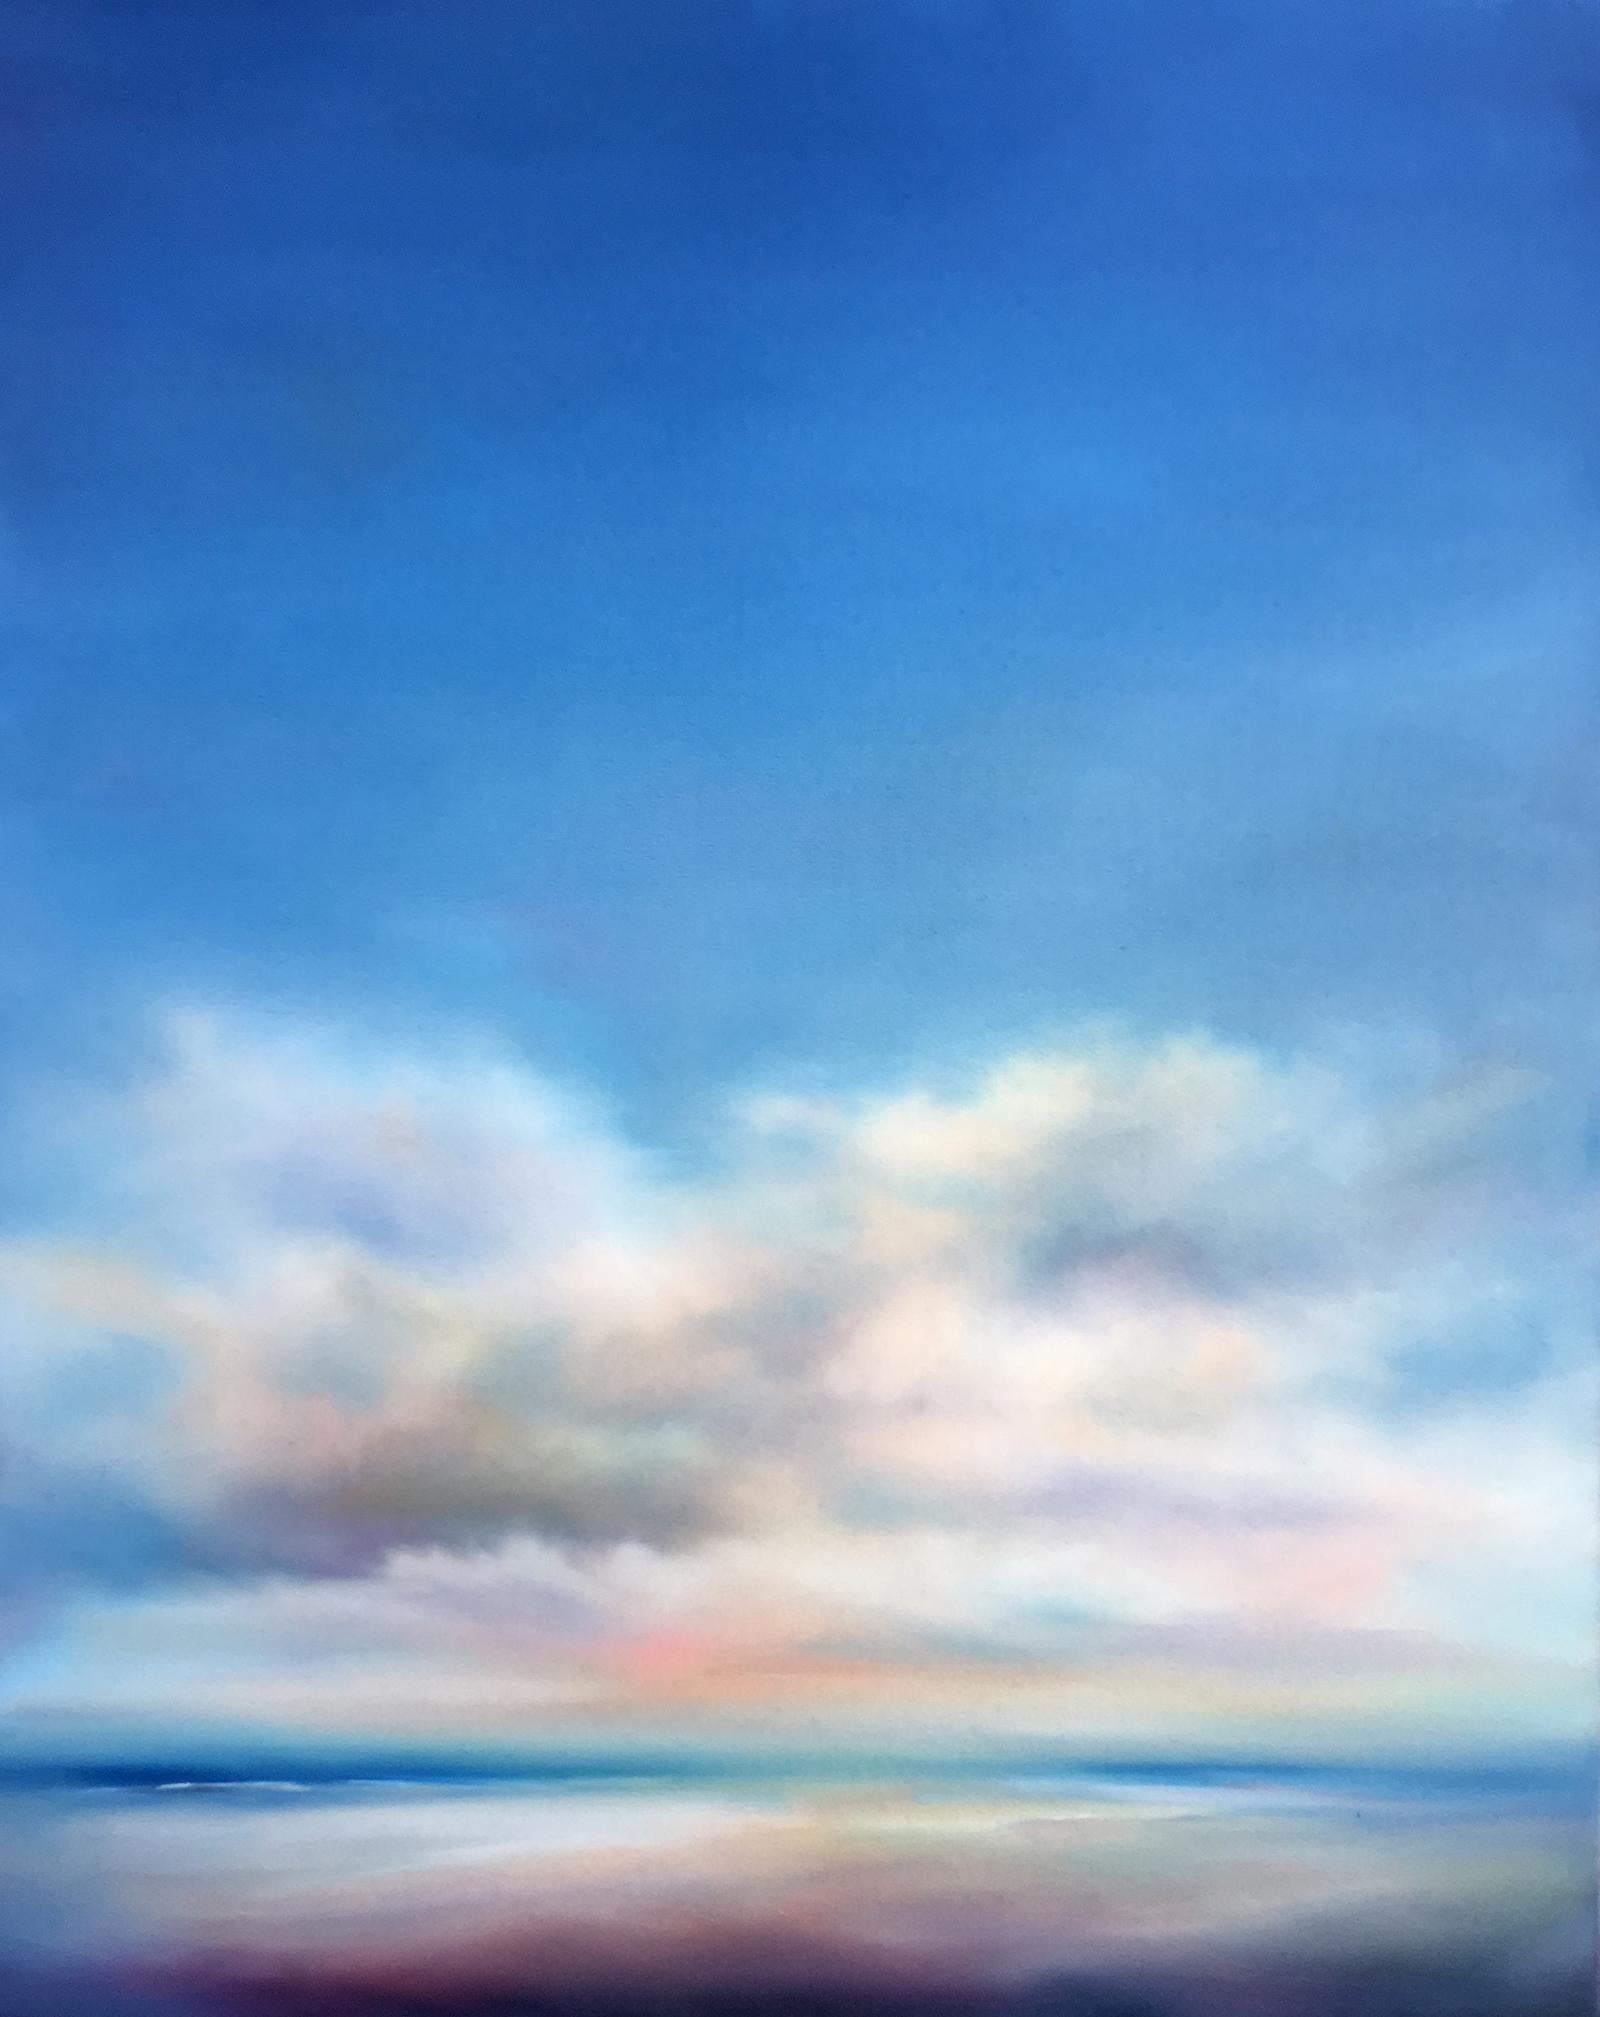 Morning Beach Clouds - Art by Nancy Hughes Miller